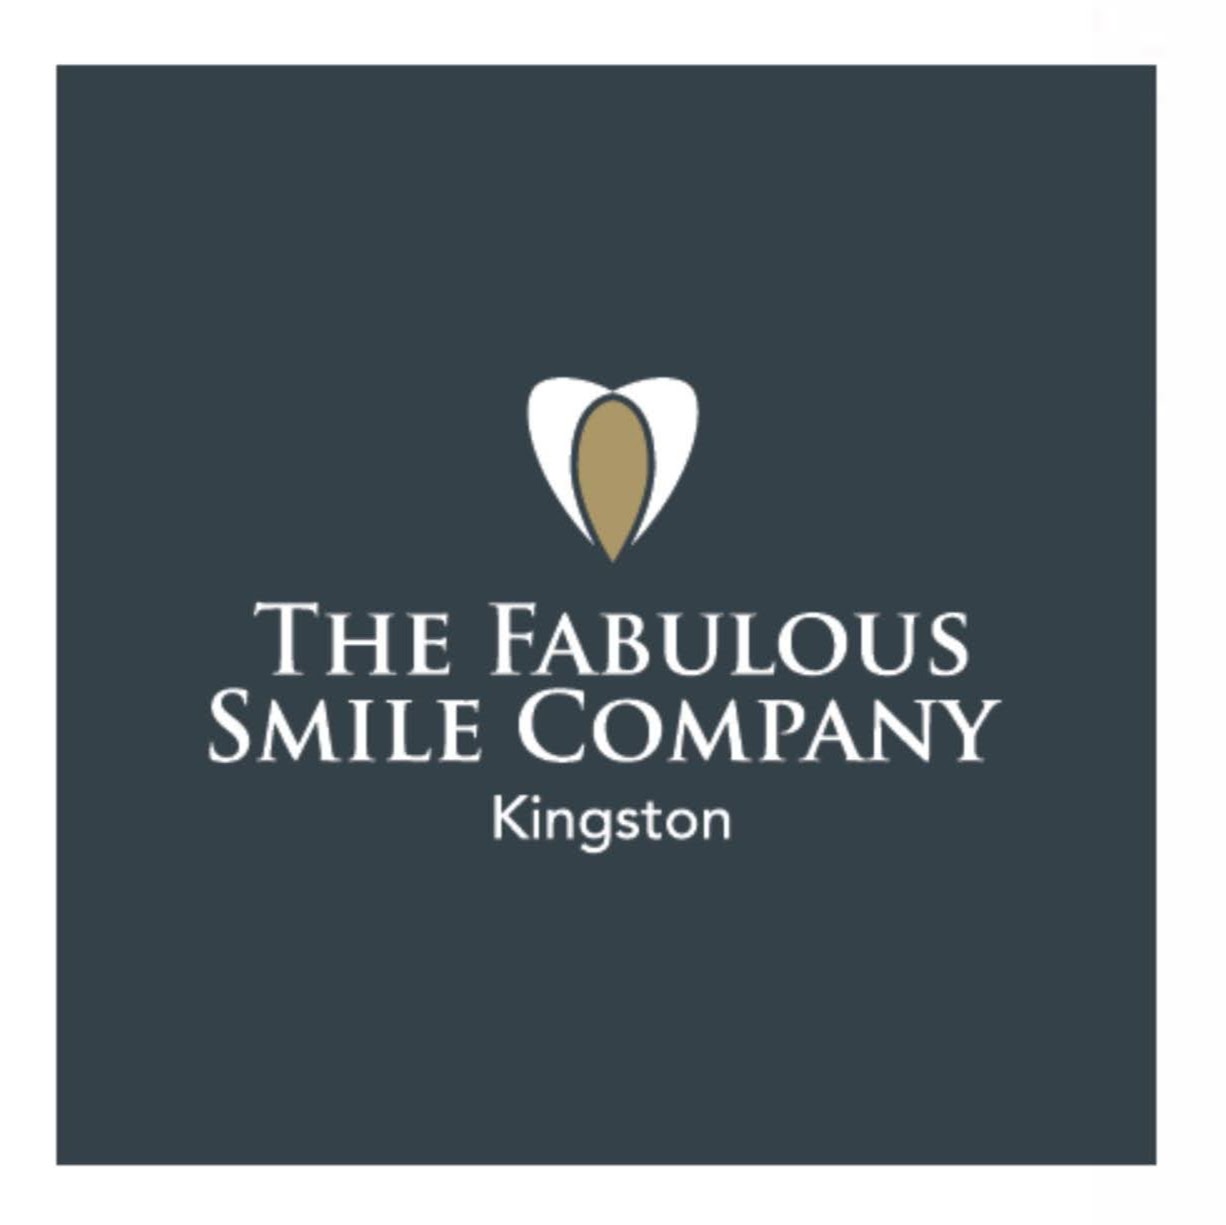 Images The Fabulous Smile Company - Kingston